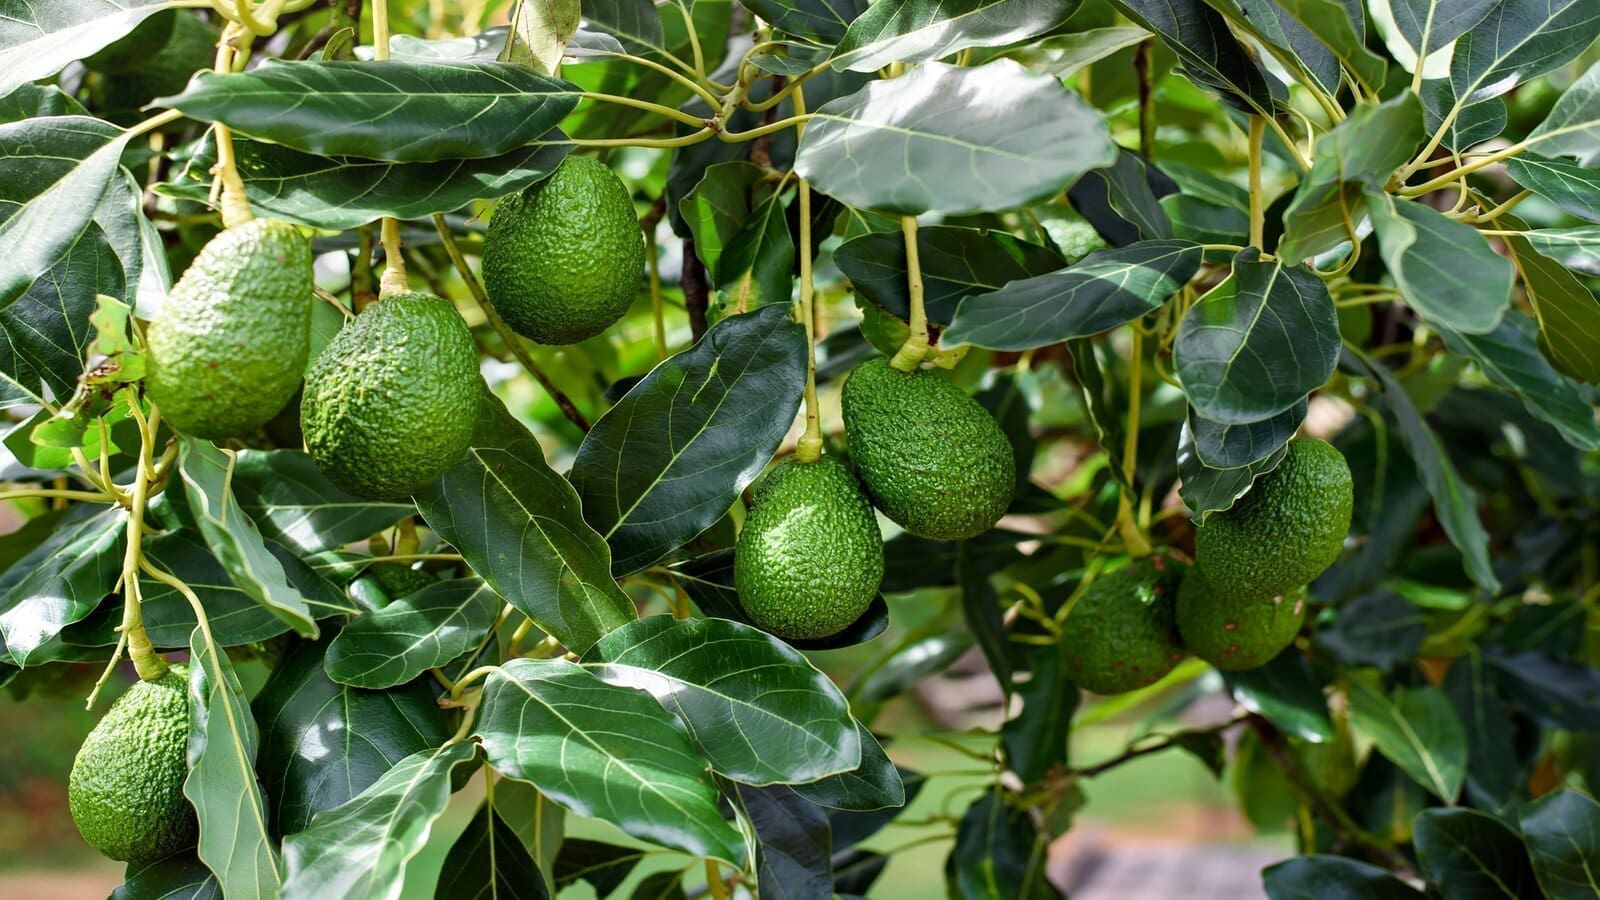 Israel-based avocado grower Granot International Company launches 400 ha farm investment in Kenya